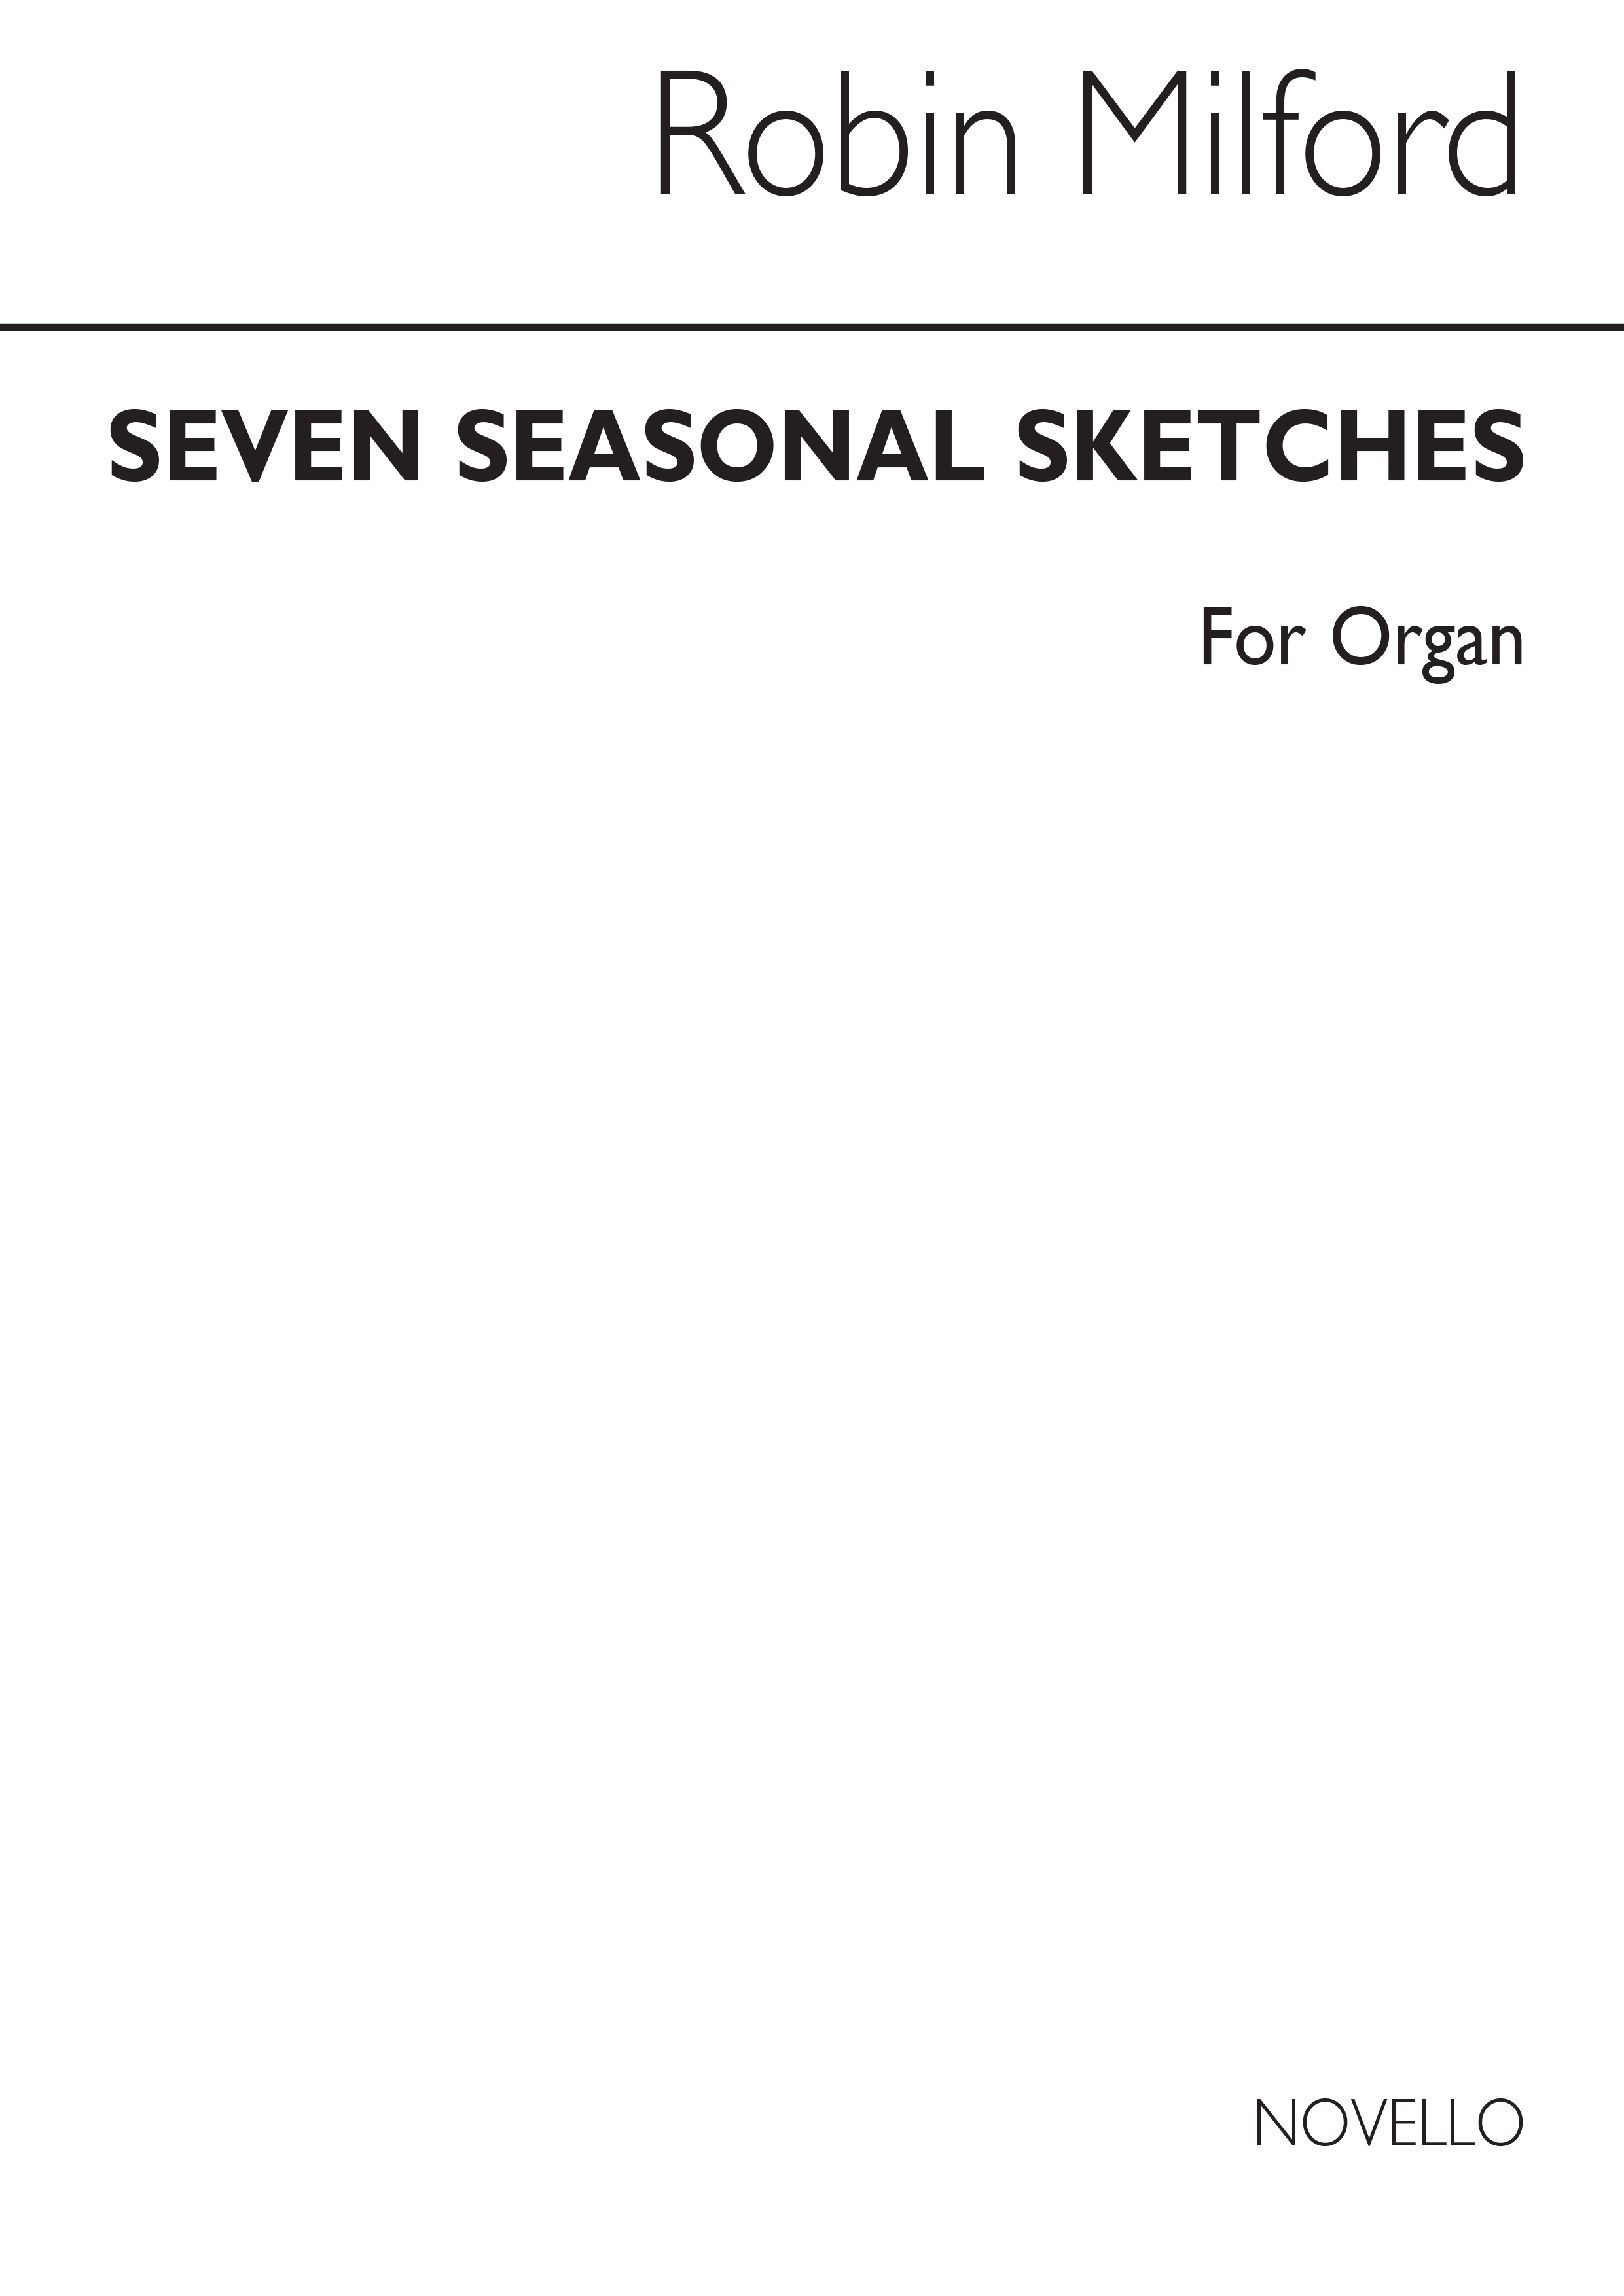 Milford: Seven Seasonal Sketches For Organ